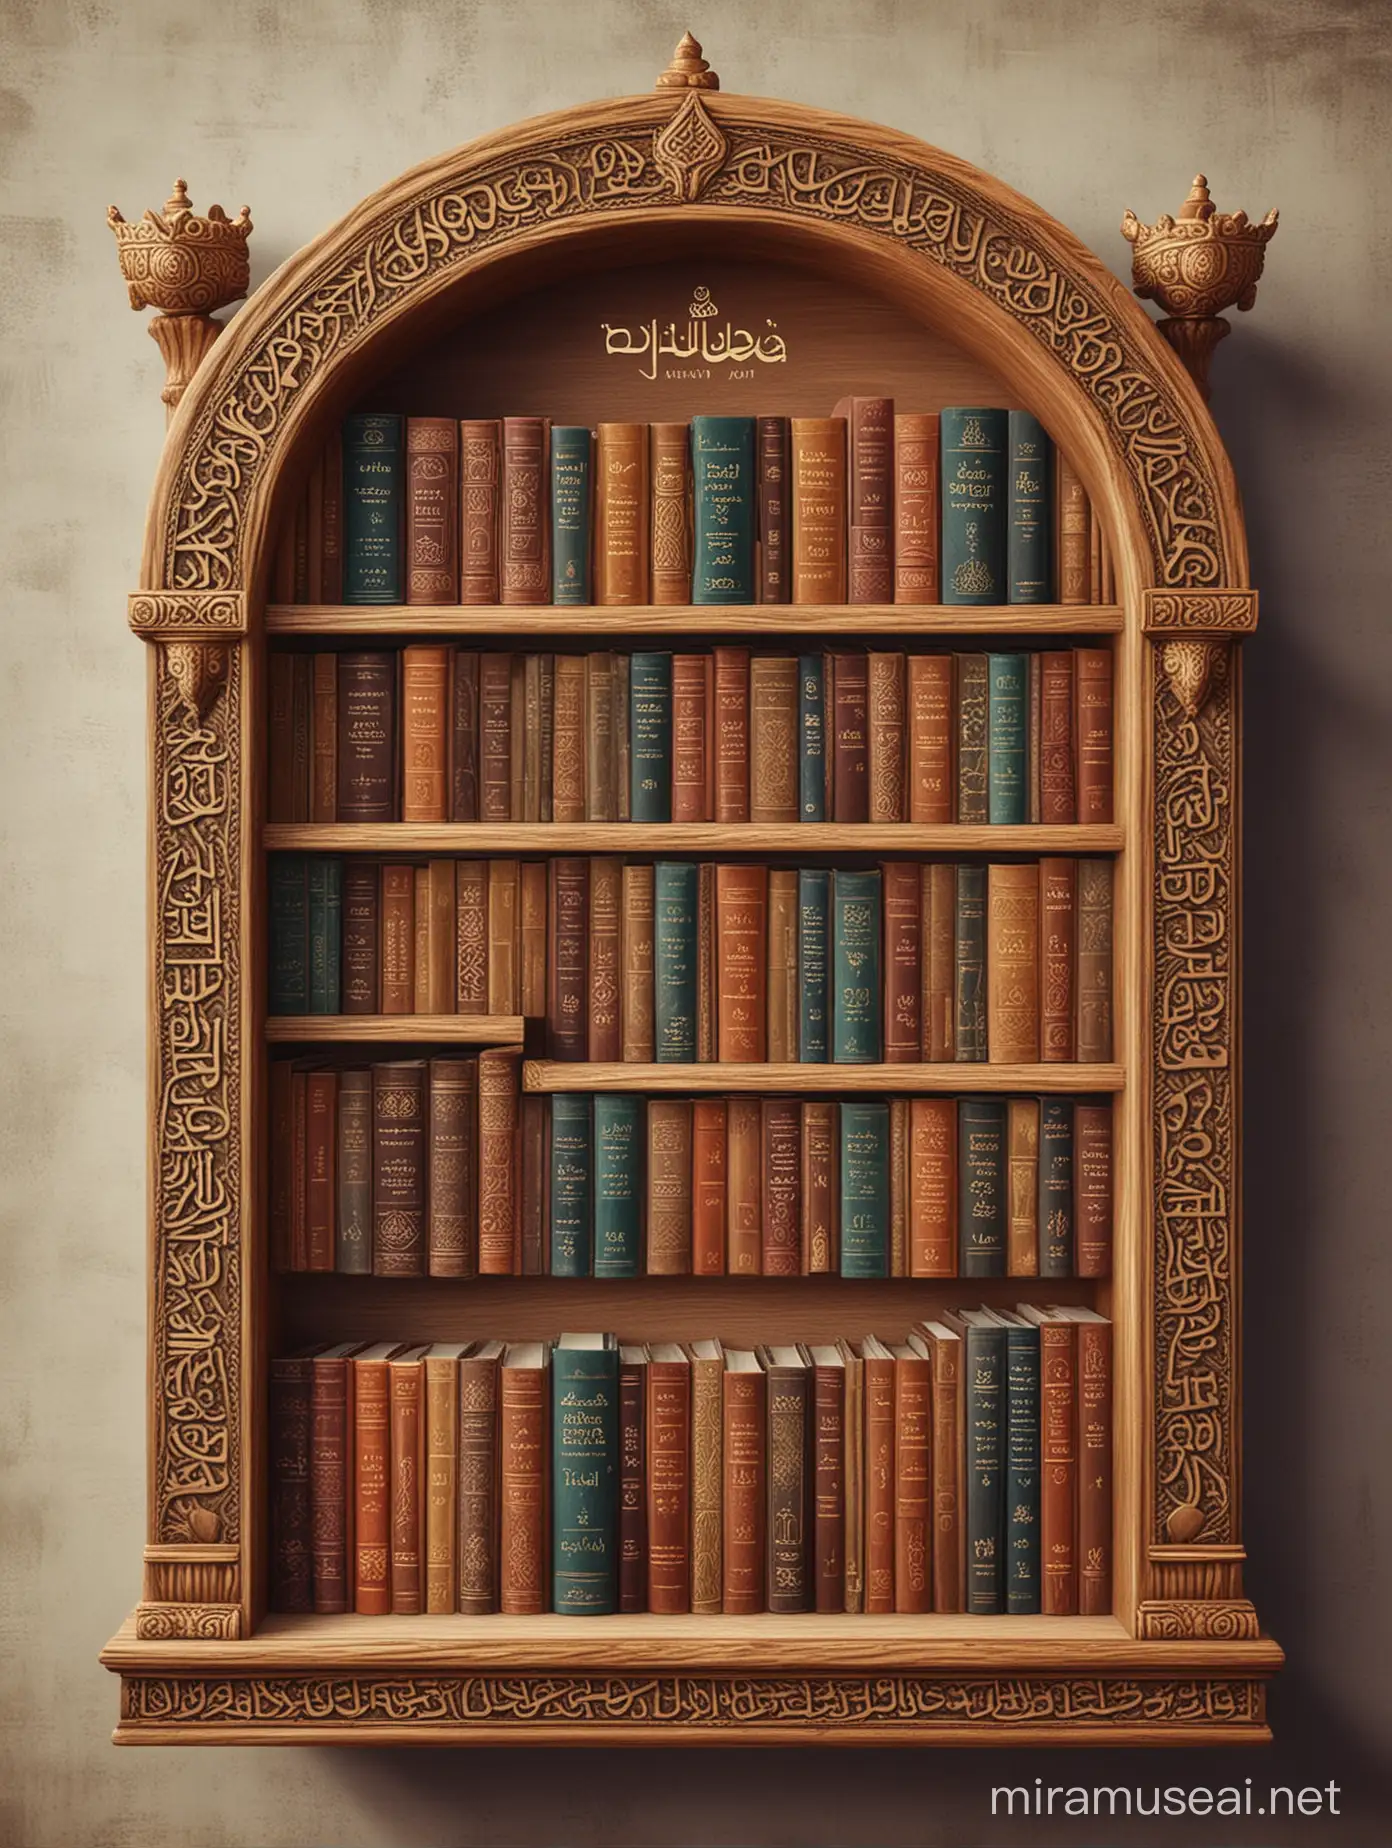 design a book shelf with divine religious books like Quran,Tawrat, Bible, old testament, Ramayana, Zabur, Injil. Book names are readable and visible.